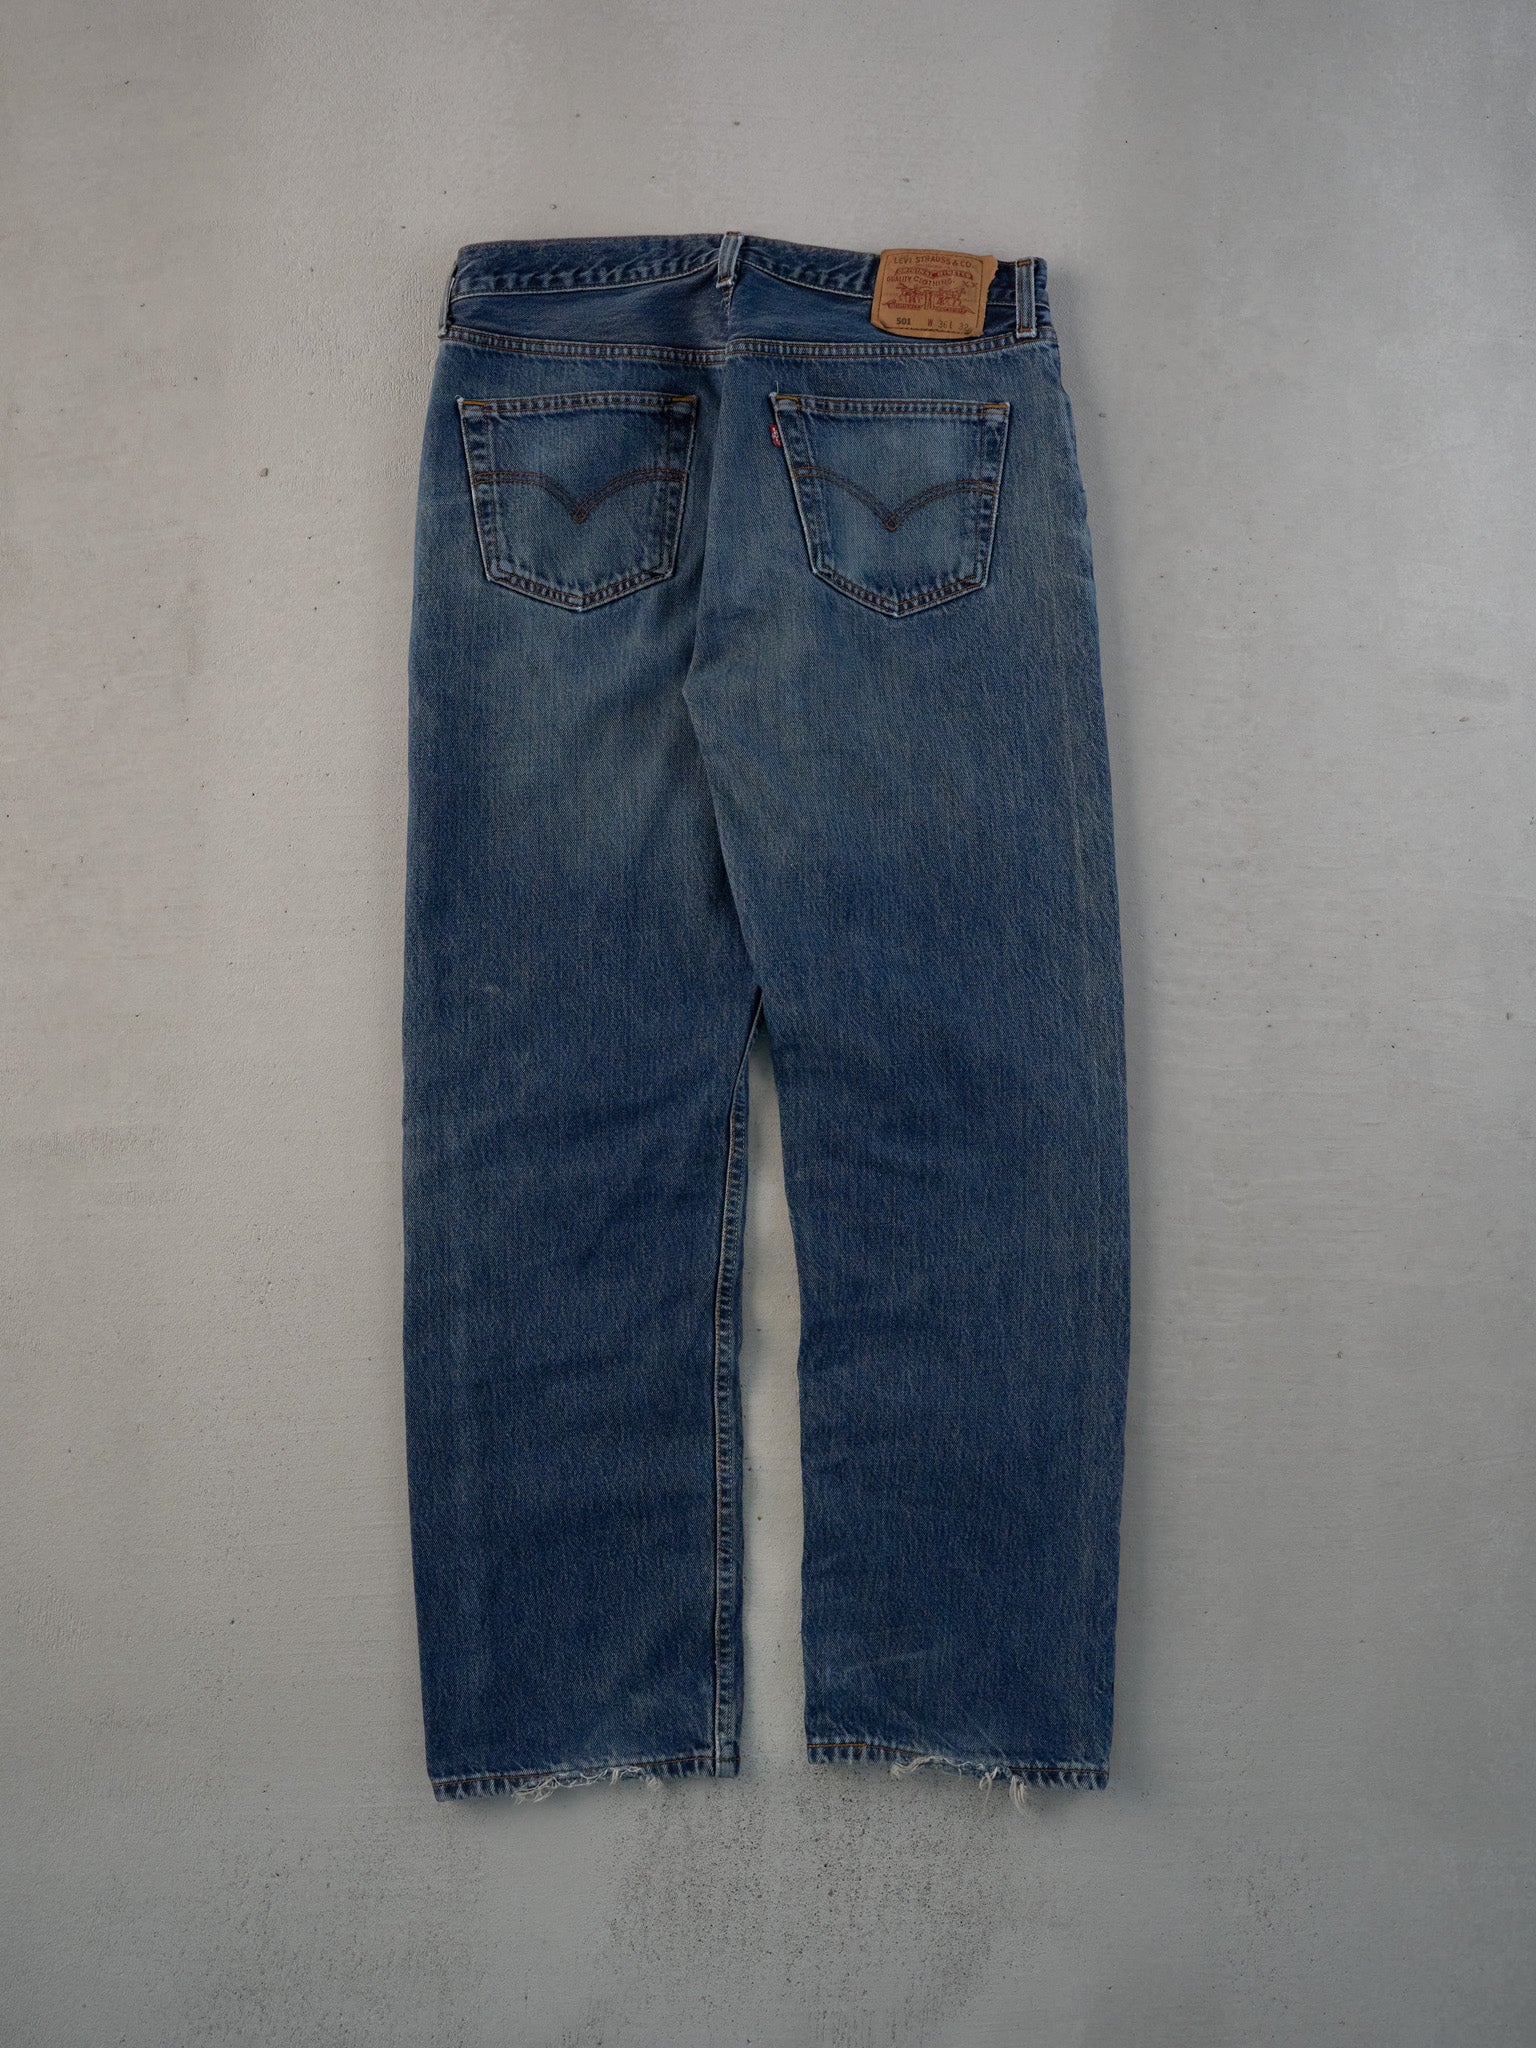 Vintage 90s Dark Blue Levi's 501 Denim Jeans (34x31)